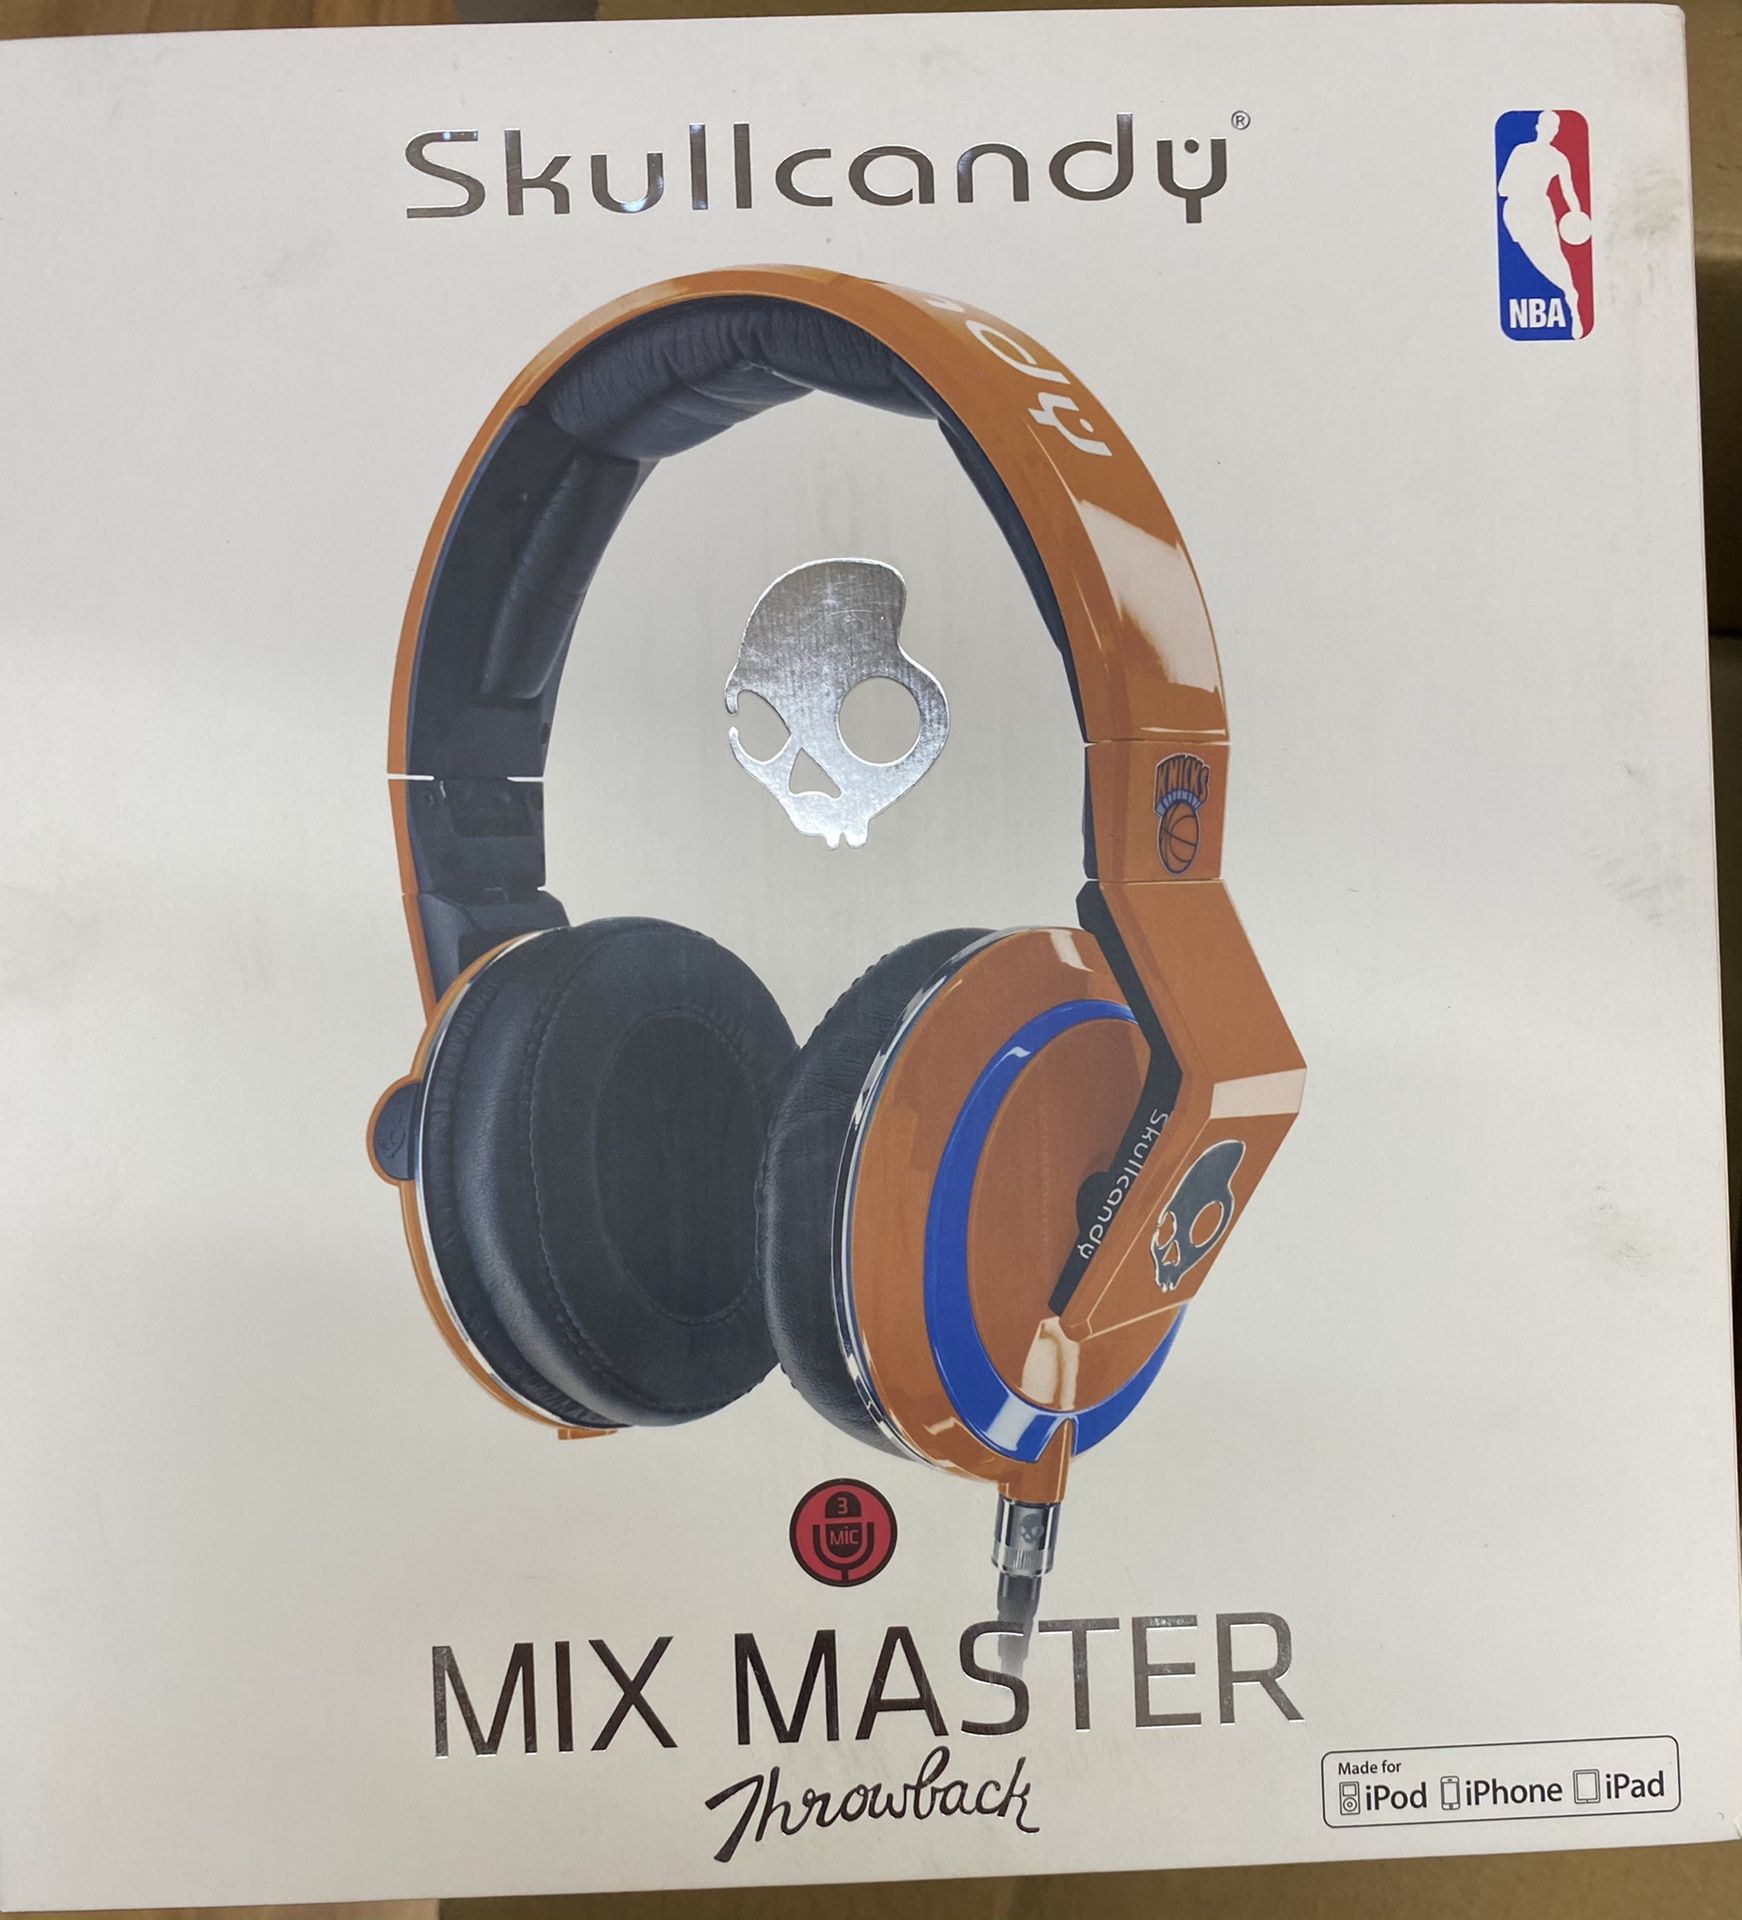 Mix Master Dj Professional headphones